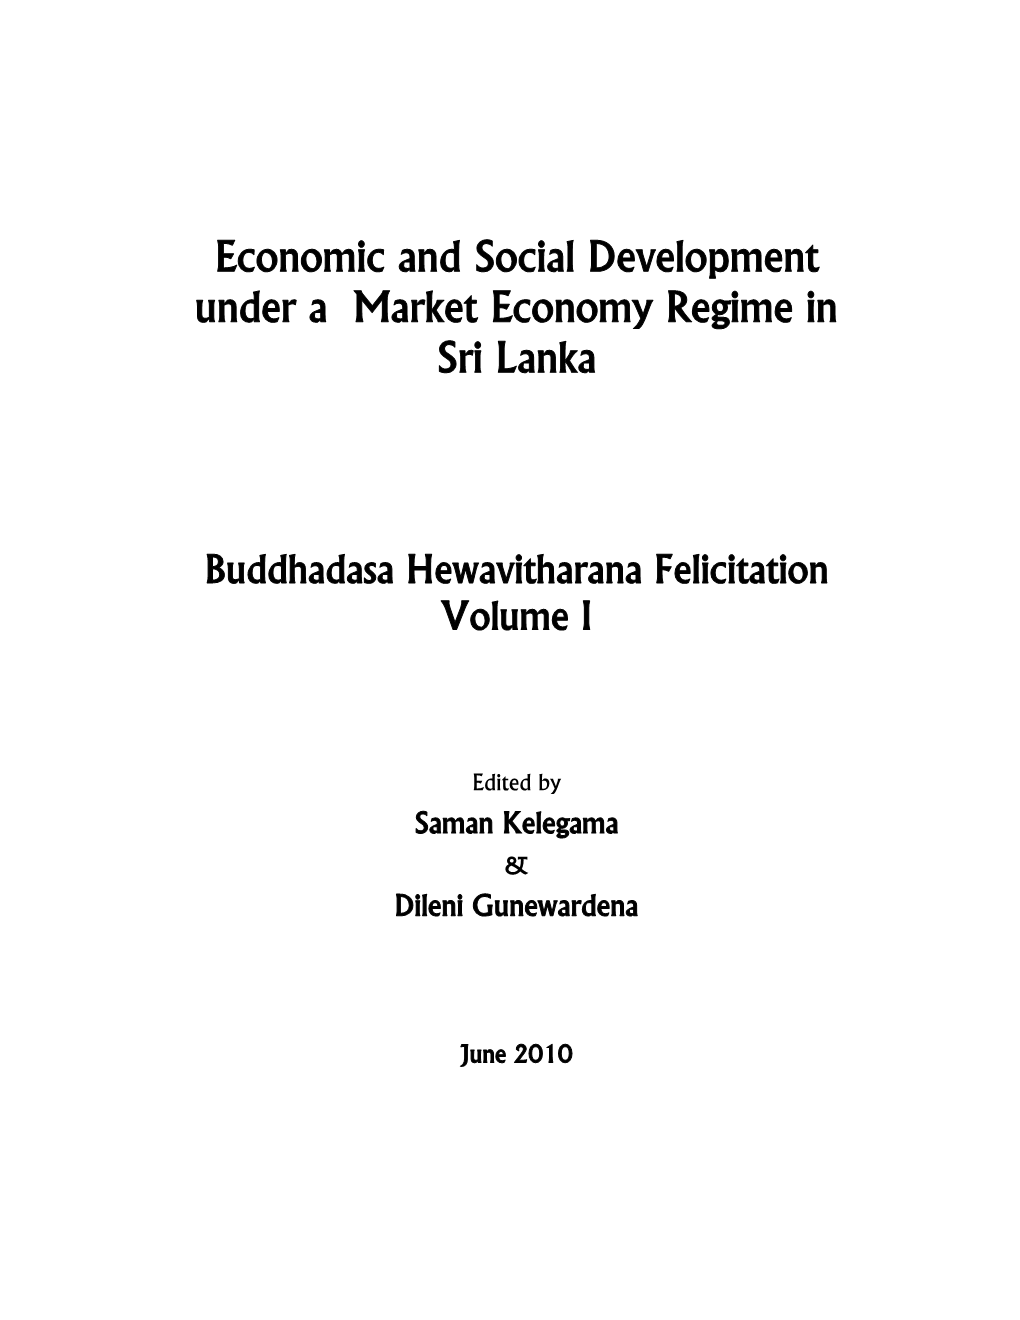 Economic and Social Development Under a Market Economy Regime in Sri Lanka